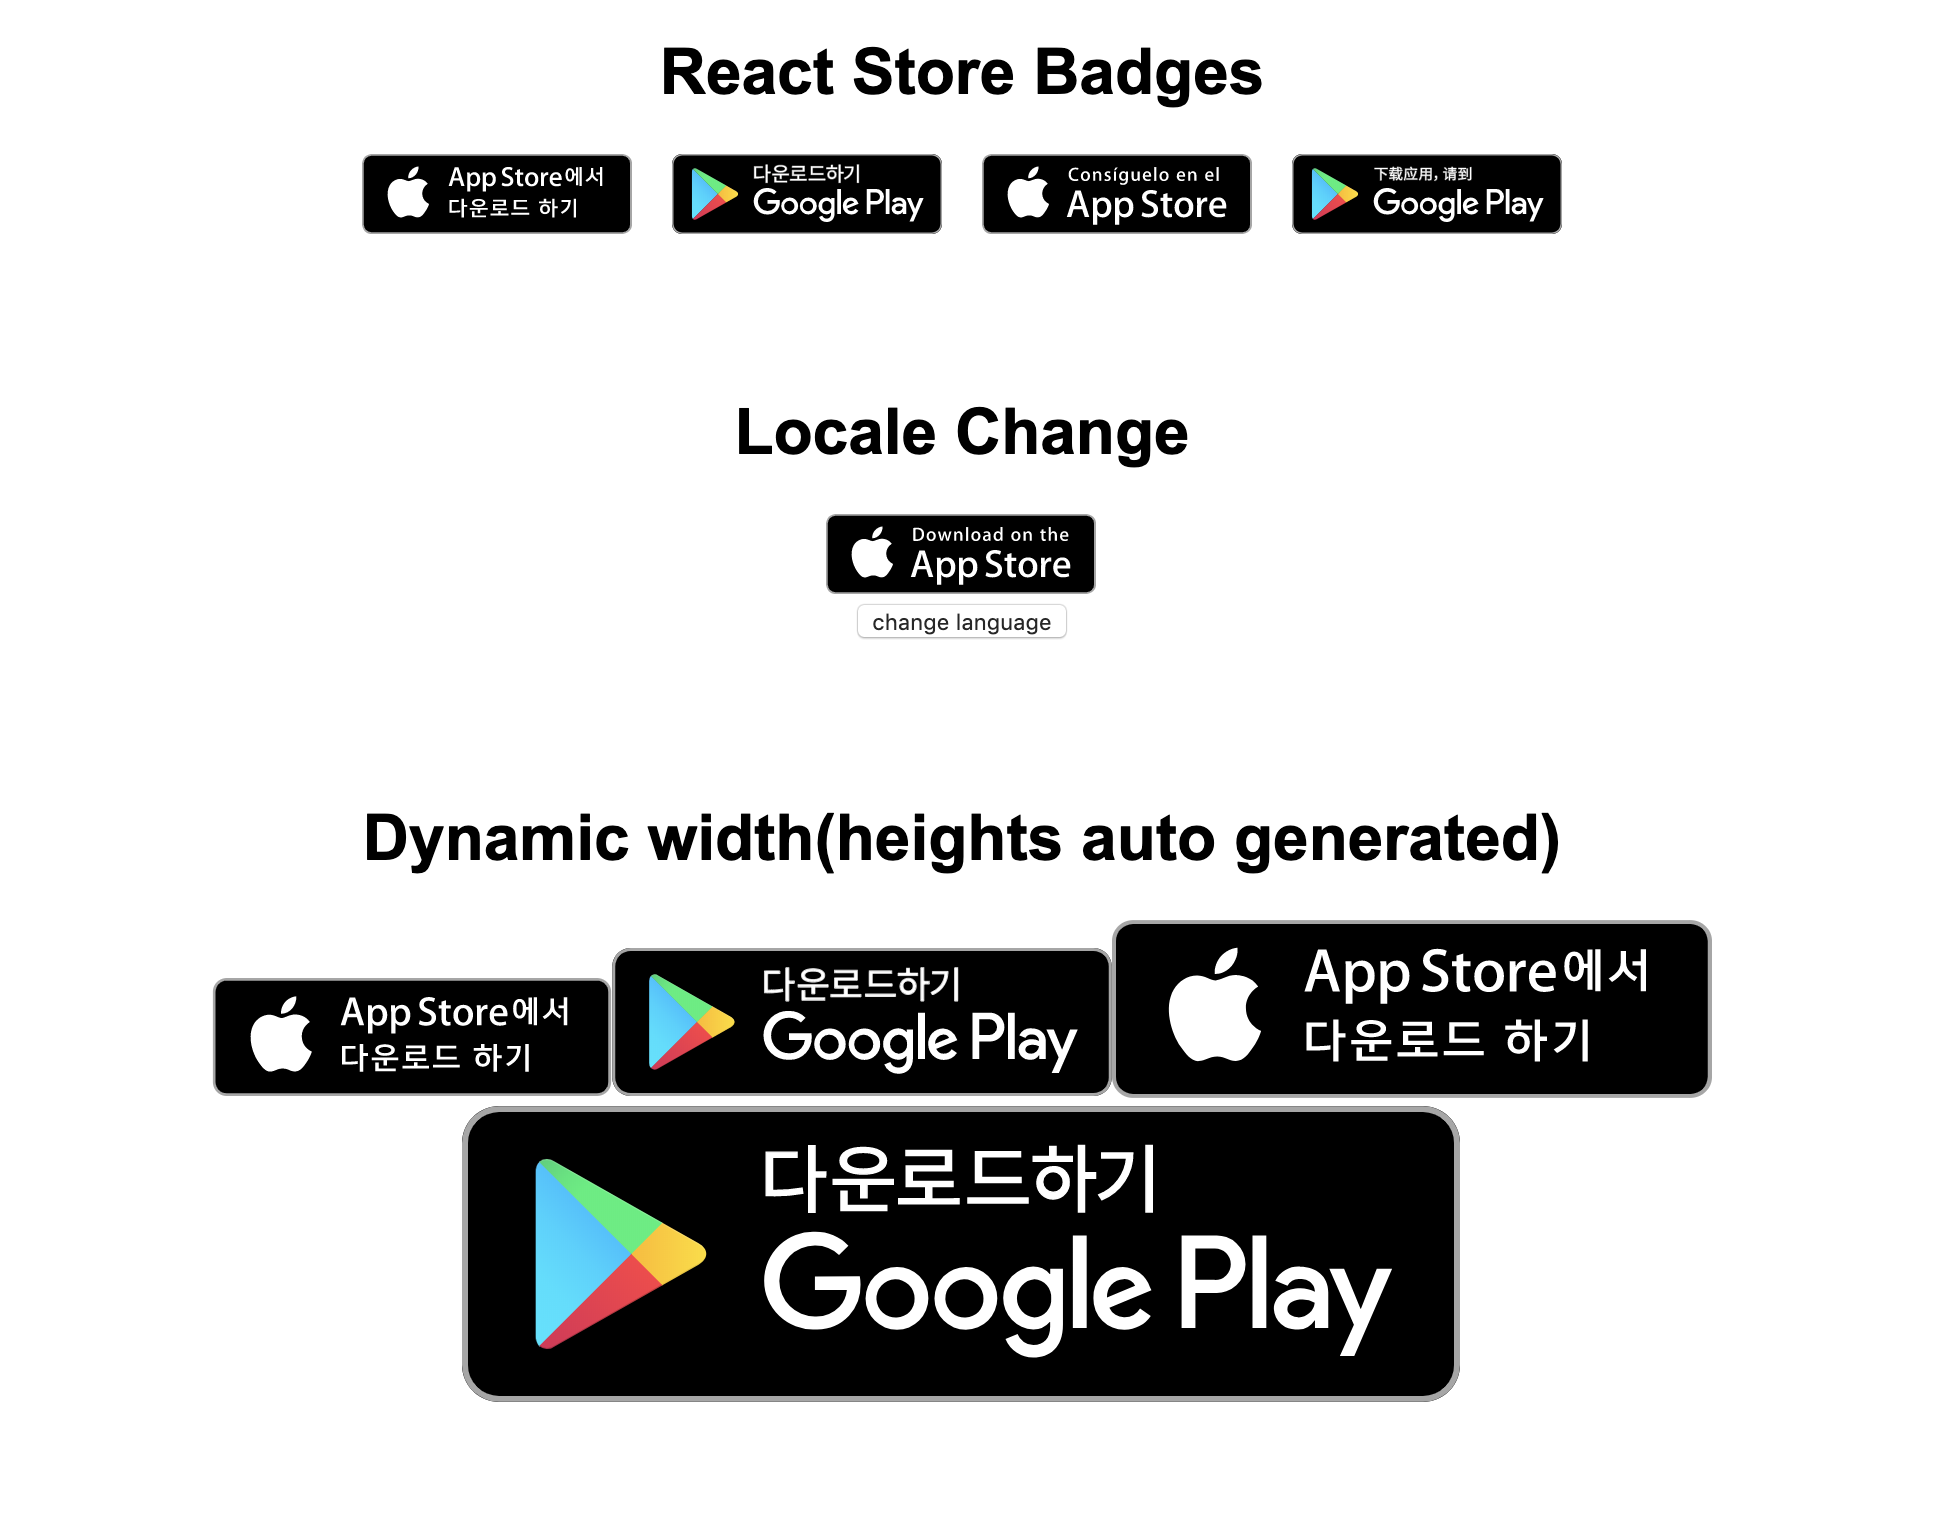 Google Play Badges – Google